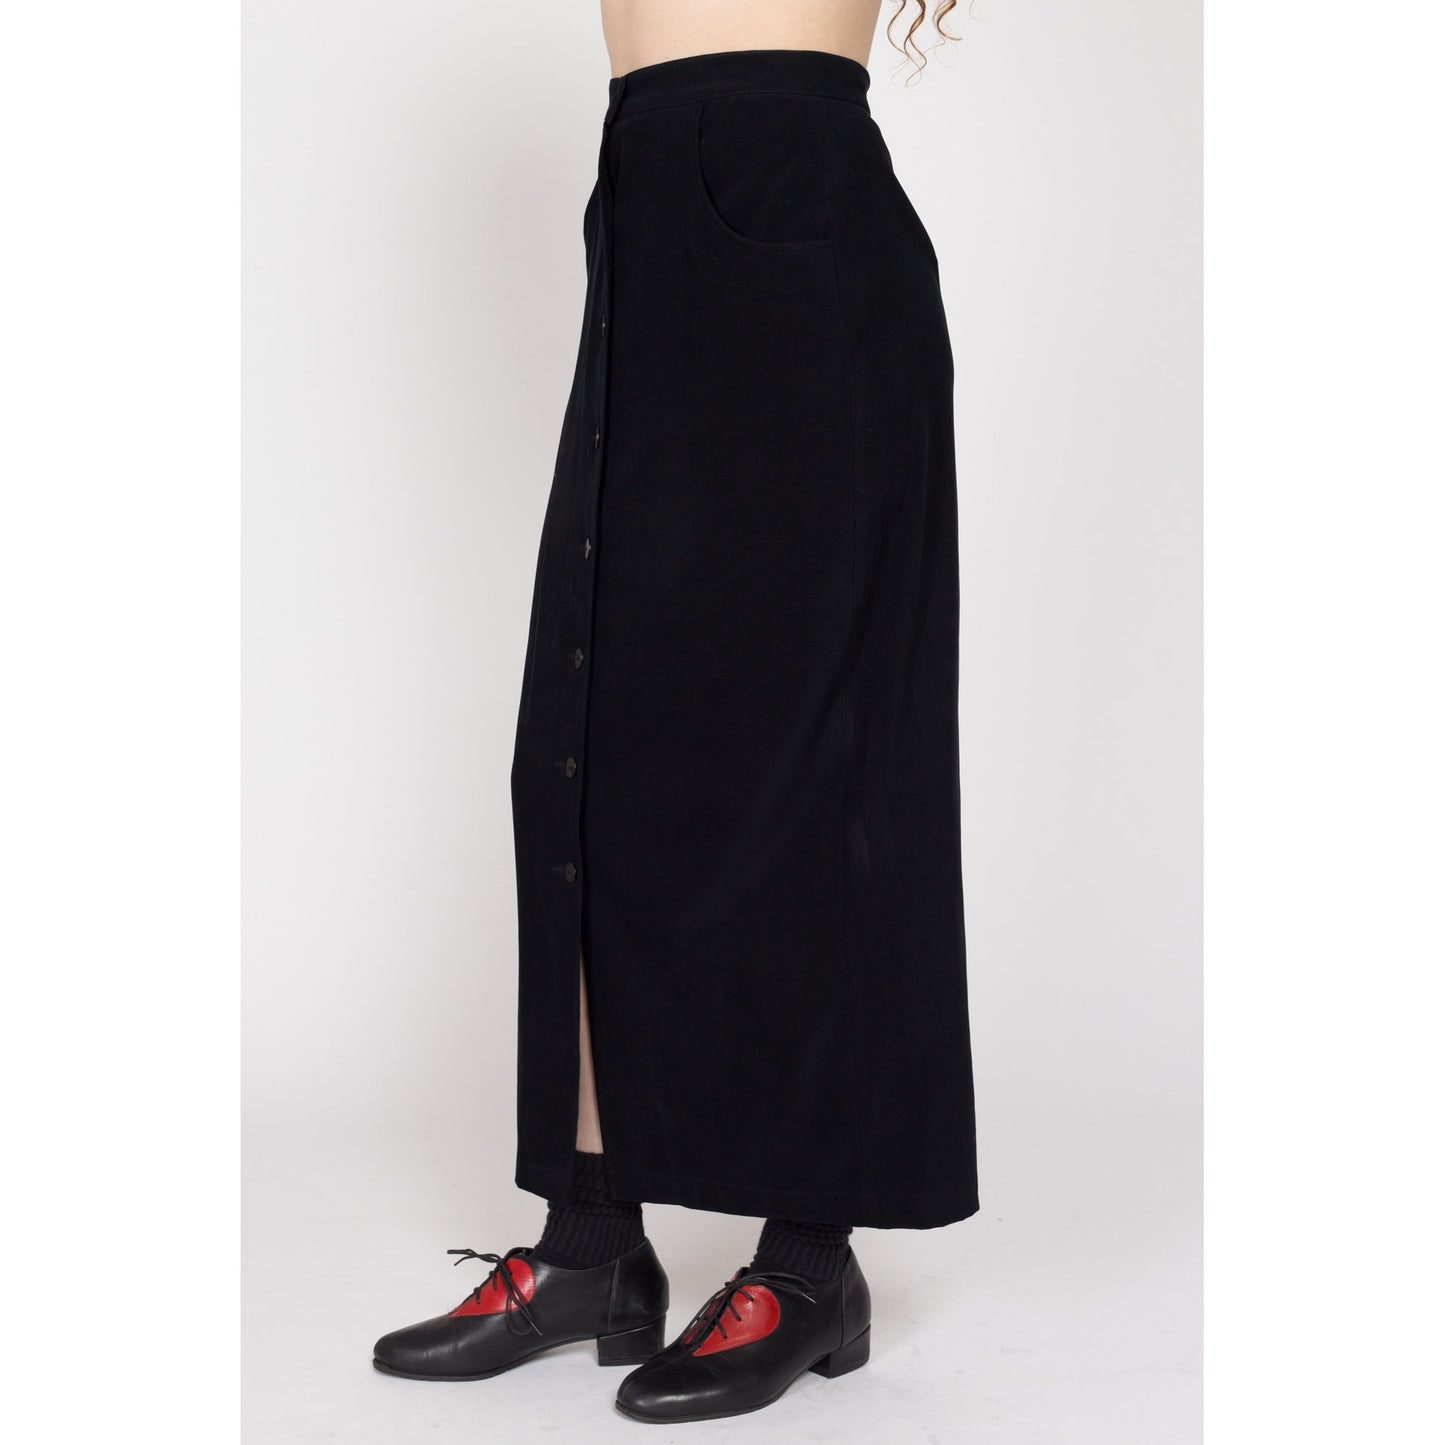 Medium 80s Black Ultrasuede Button Front Maxi Skirt 27.5" | Vintage Minimalist High Waisted Pocket Skirt